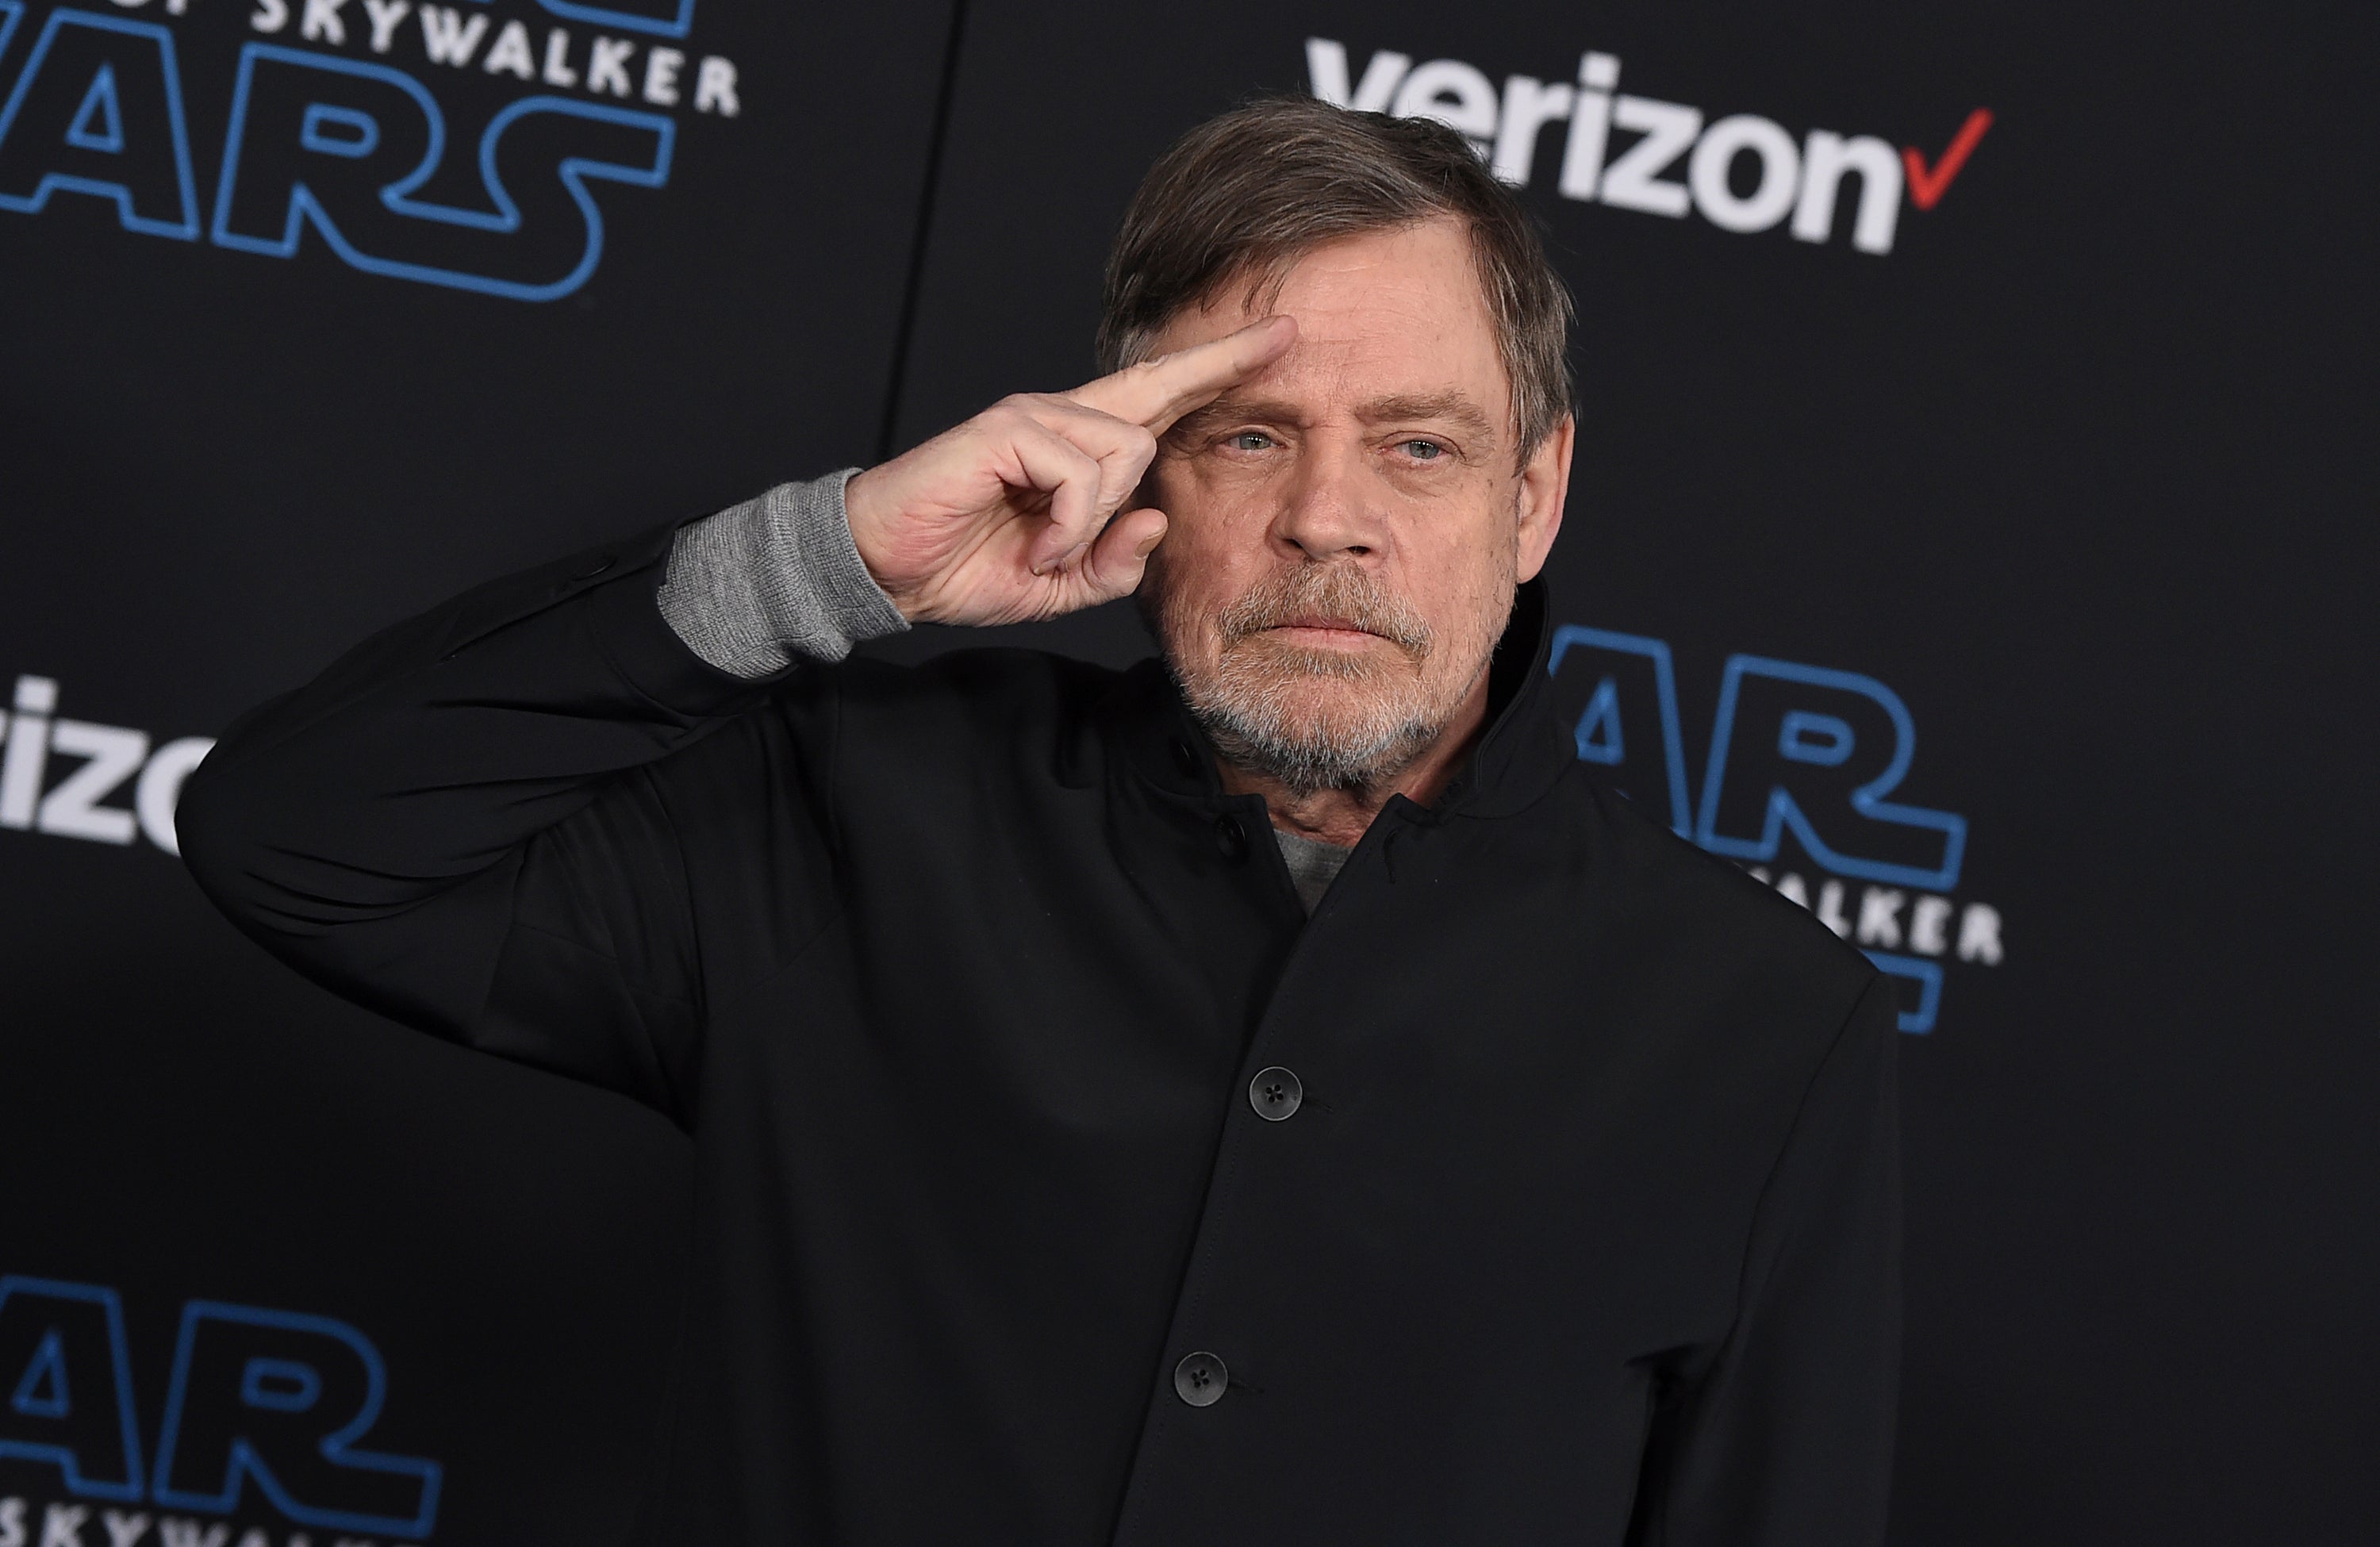 Star Wars' Mark Hamill addresses whether he will appear as Luke Skywalker  again